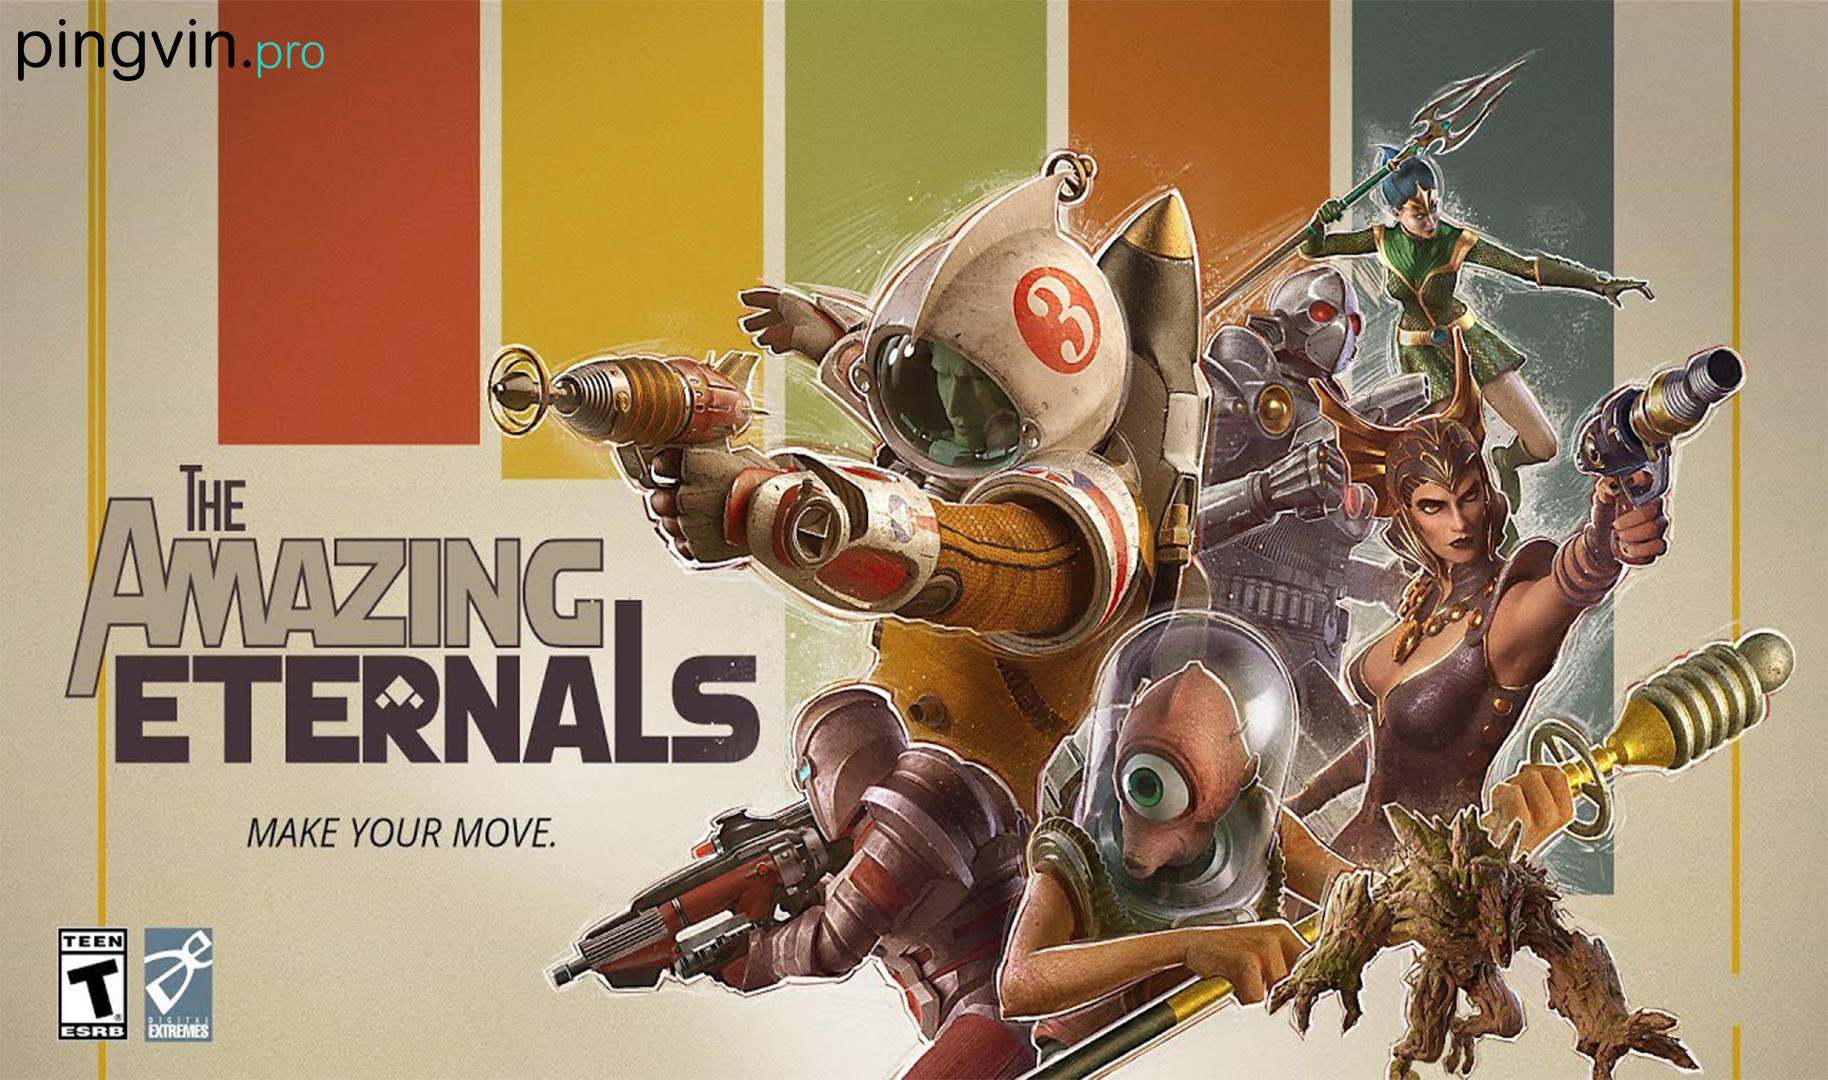 The Amazing Eternals